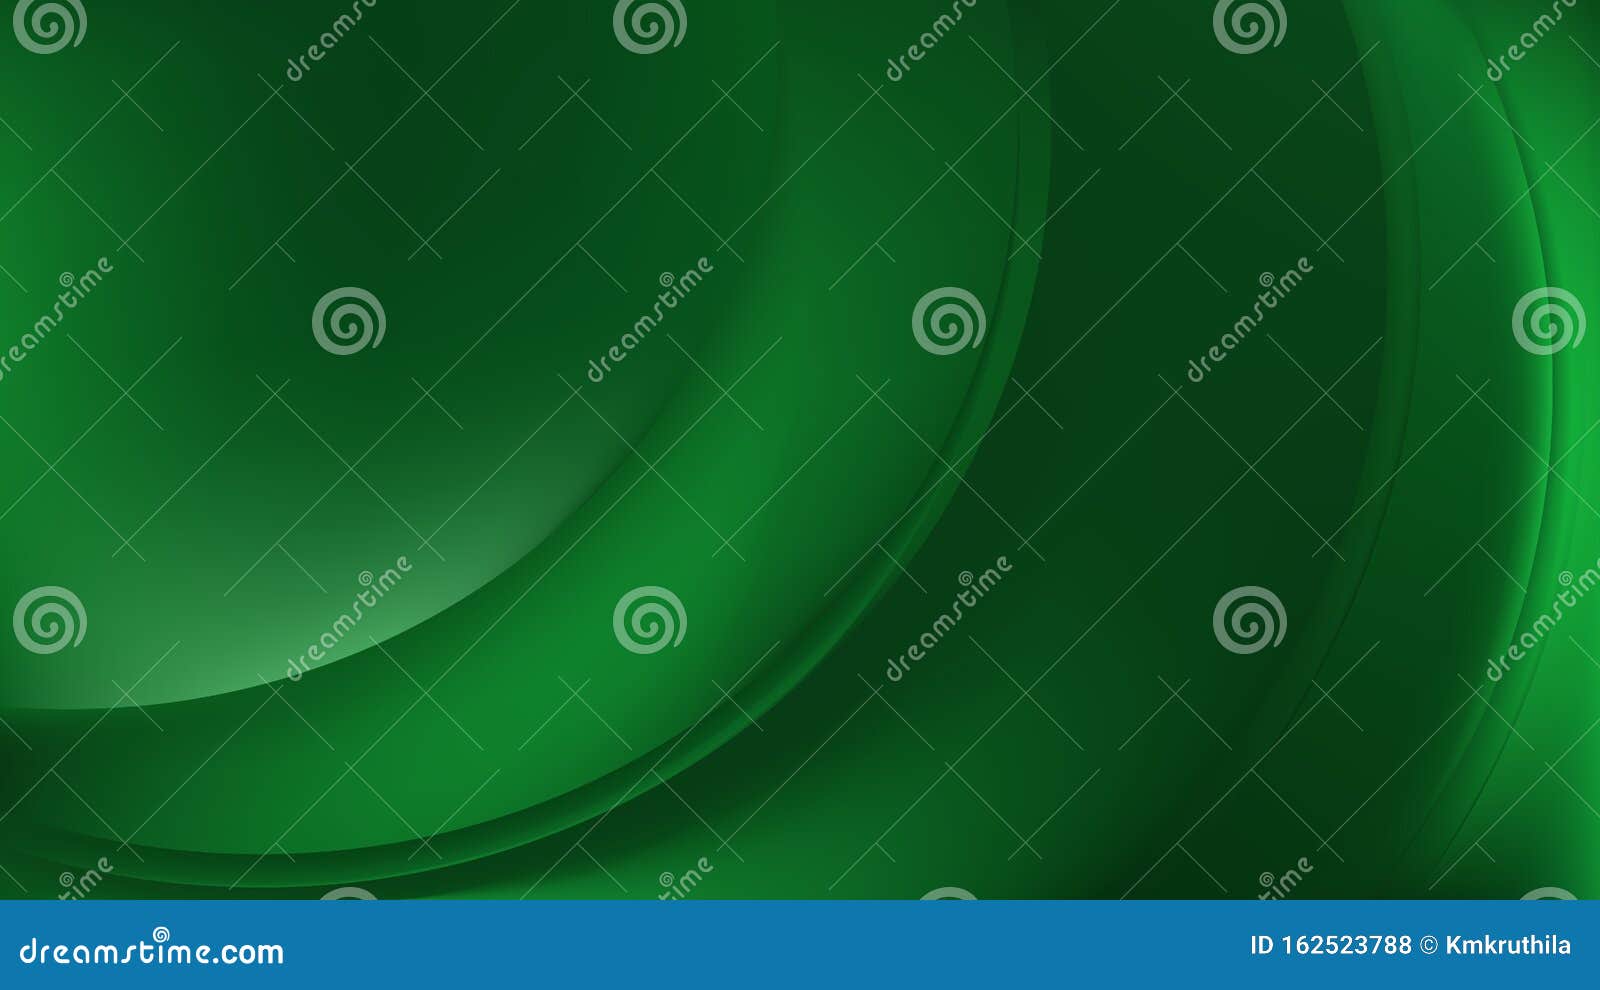 Dark Green Wavy Background Design Stock Vector - Illustration of ...